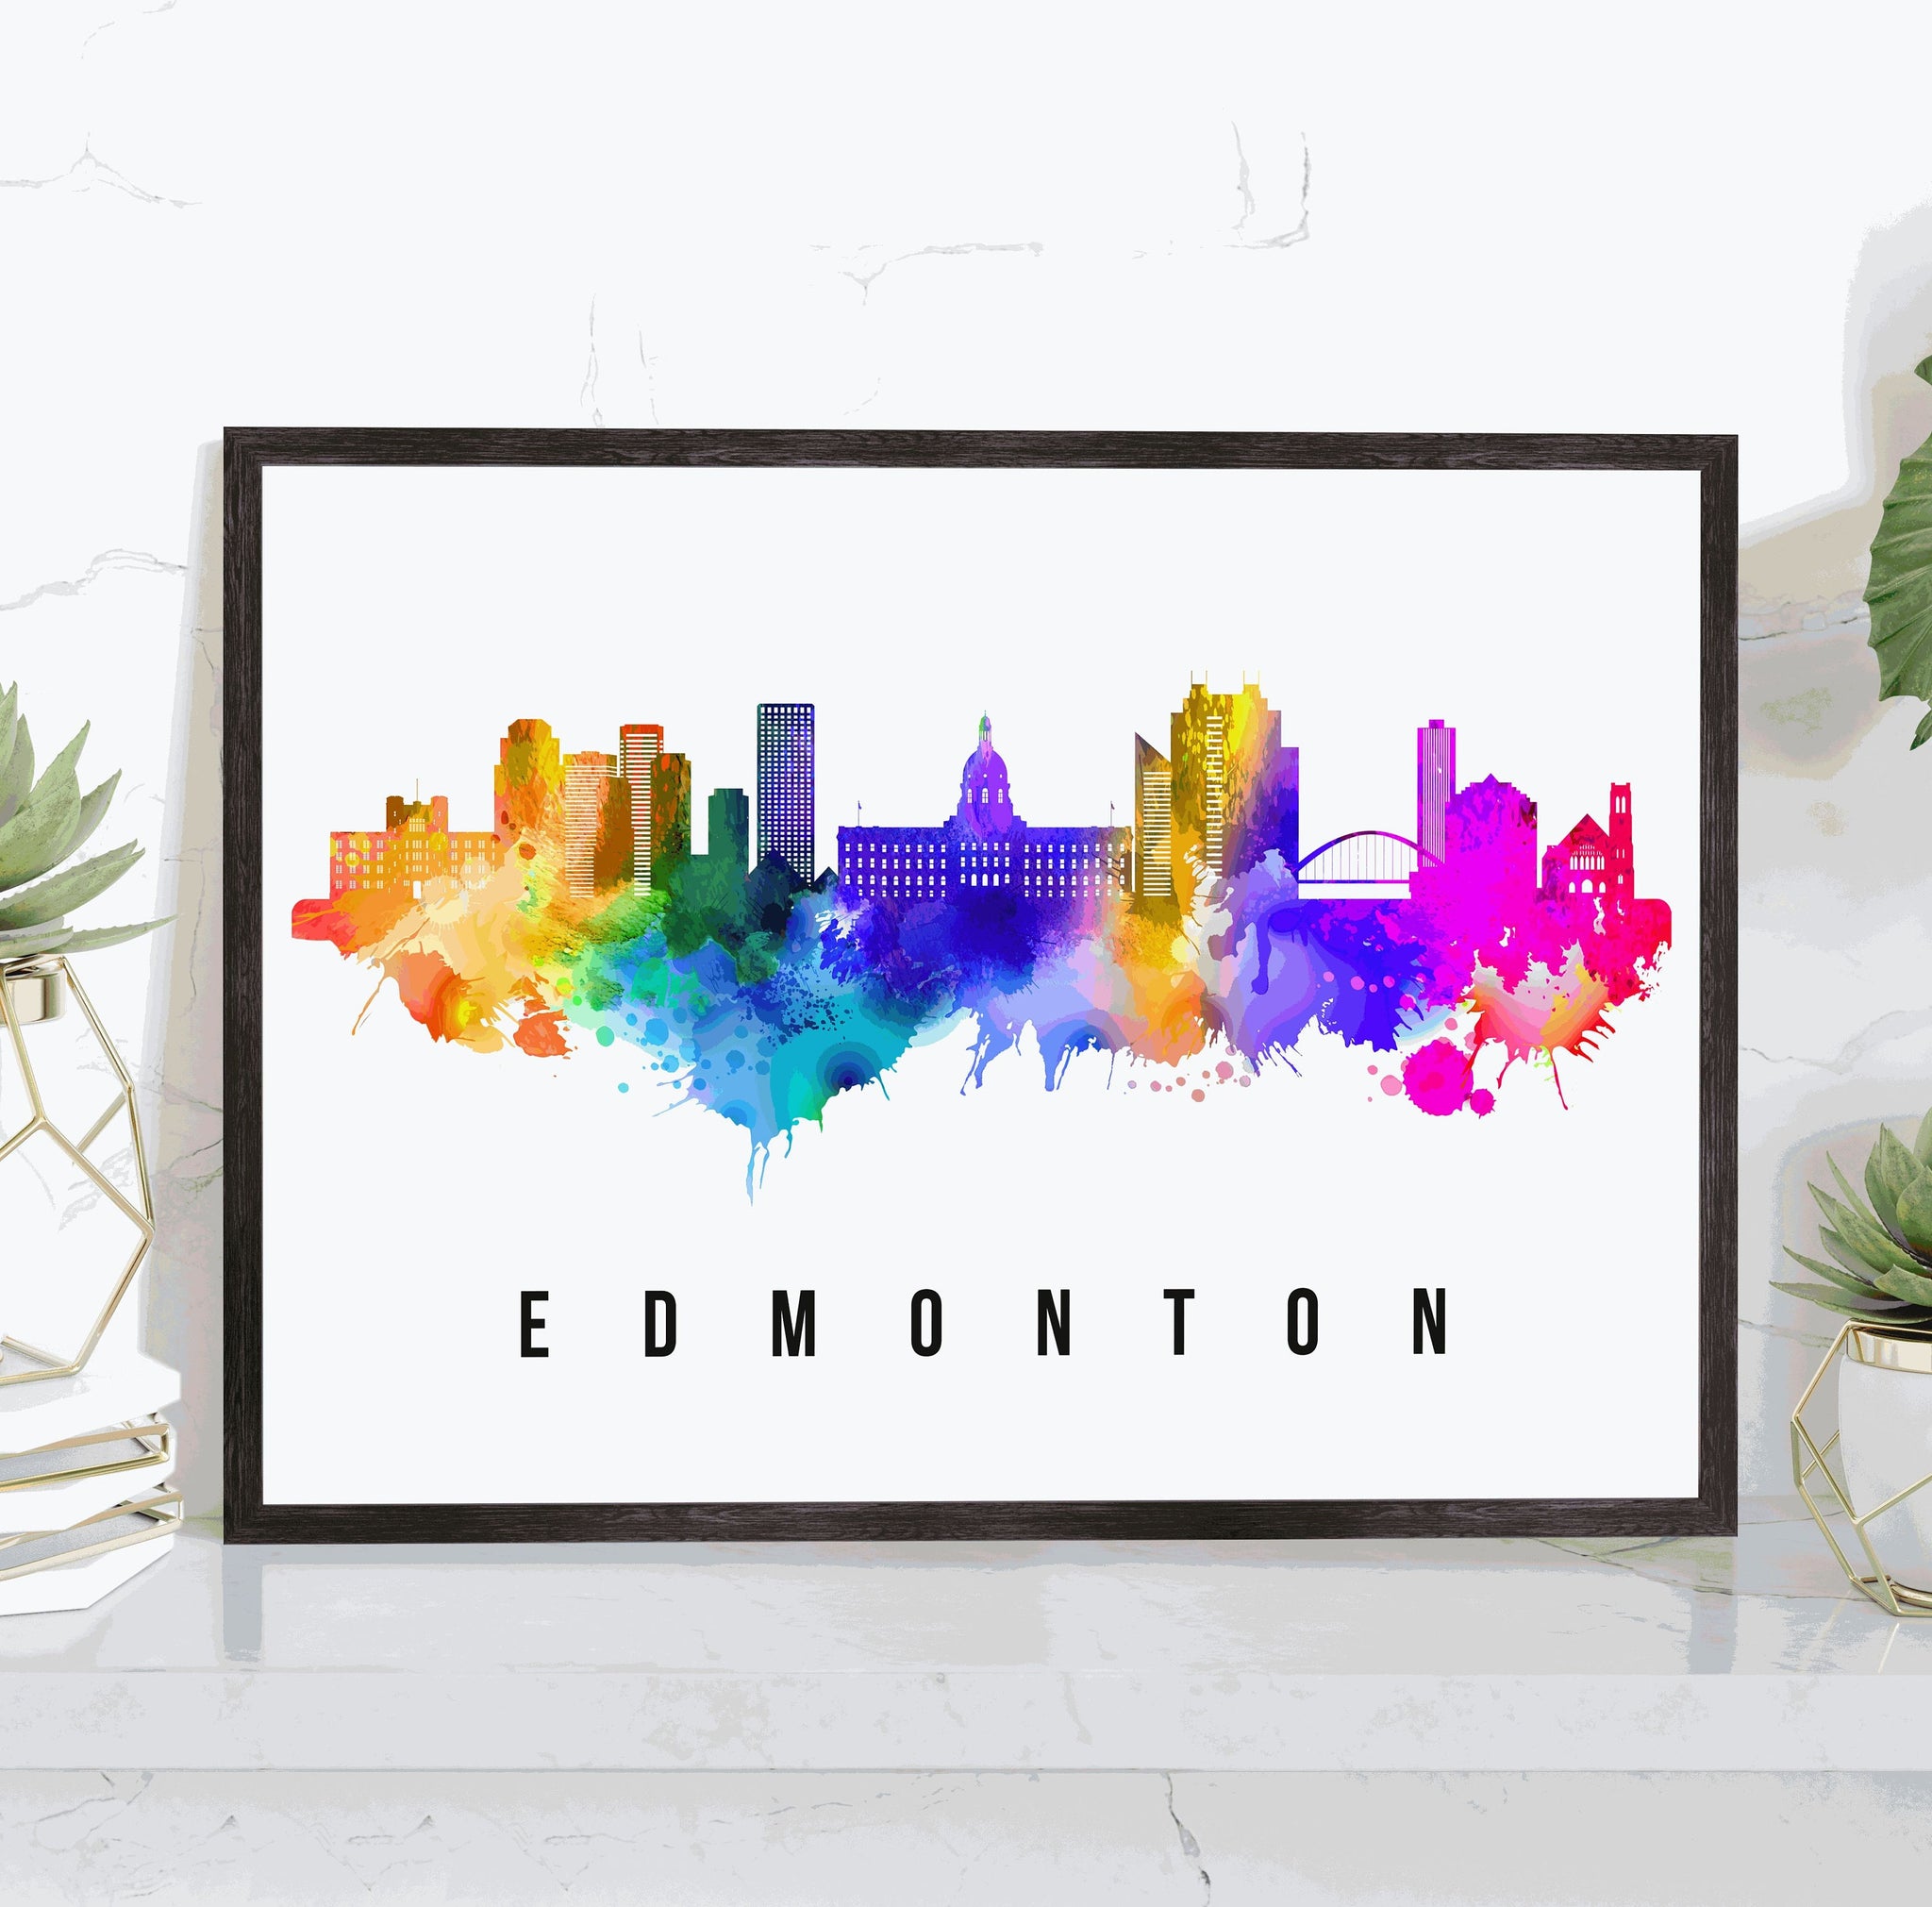 EDMONTON - CANADA Poster,  Skyline Poster Cityscape and Landmark Edmonton Illustration Home Wall Art, Office Decor